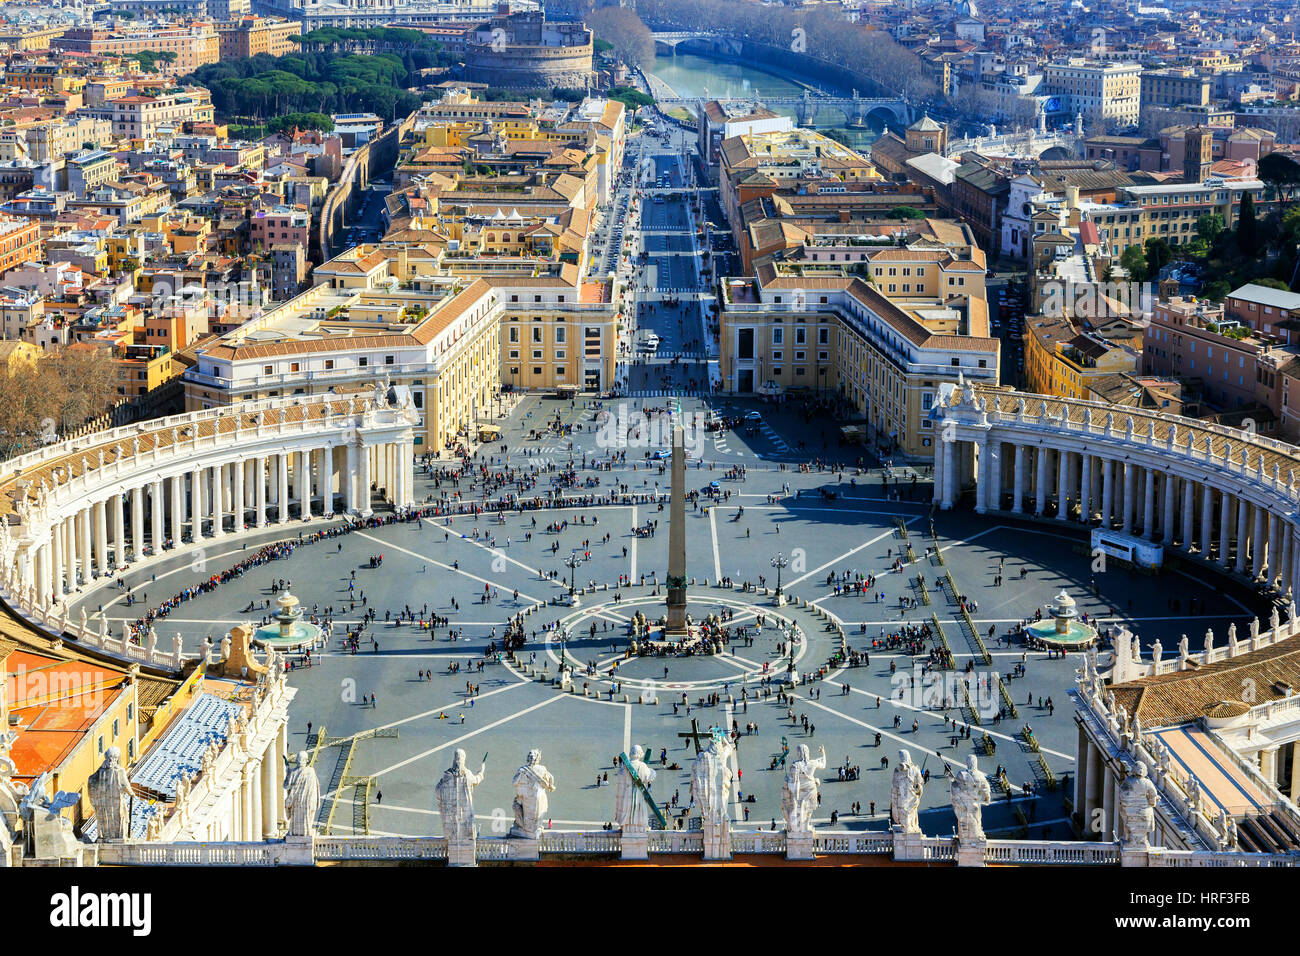 High View sur St Peters Square, Piazza di San Pietro, Vatican, Rome, Italie Banque D'Images